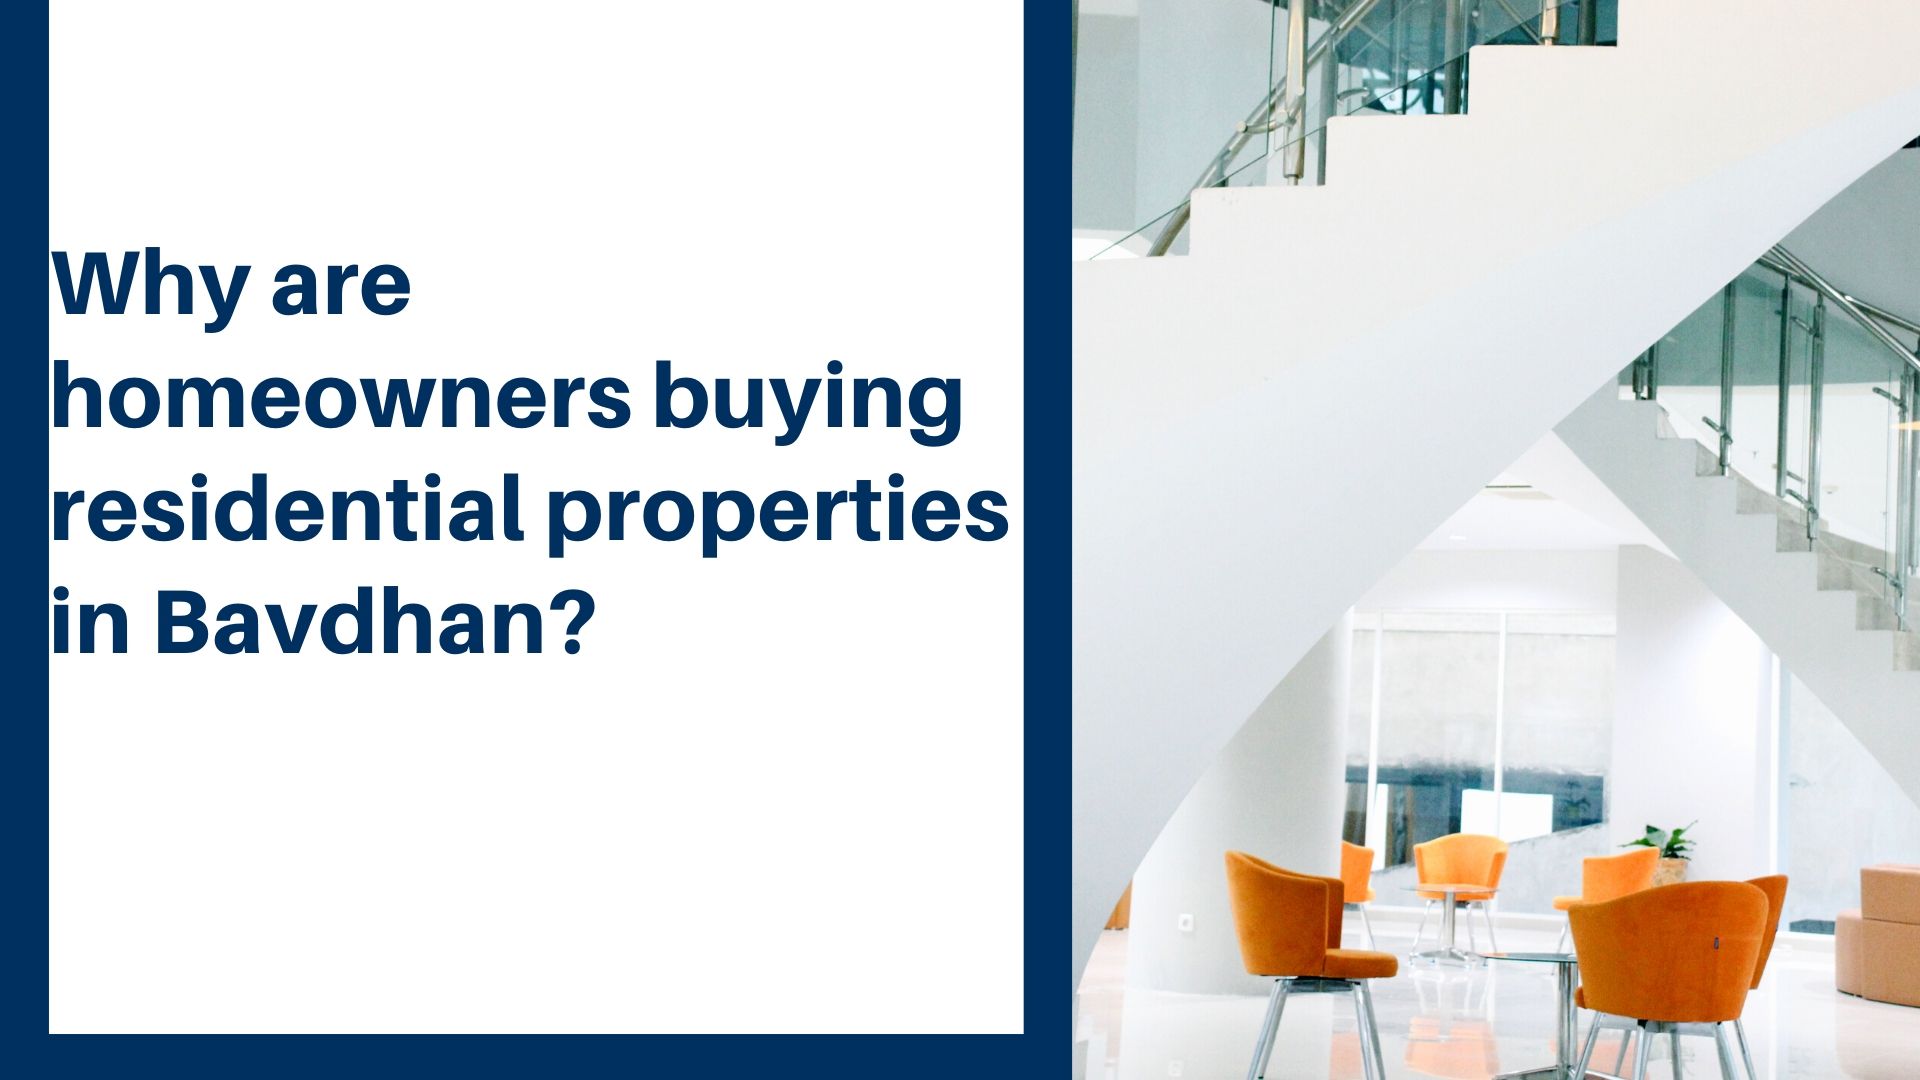 Why are homeowners buying residential properties in Bavdhan?